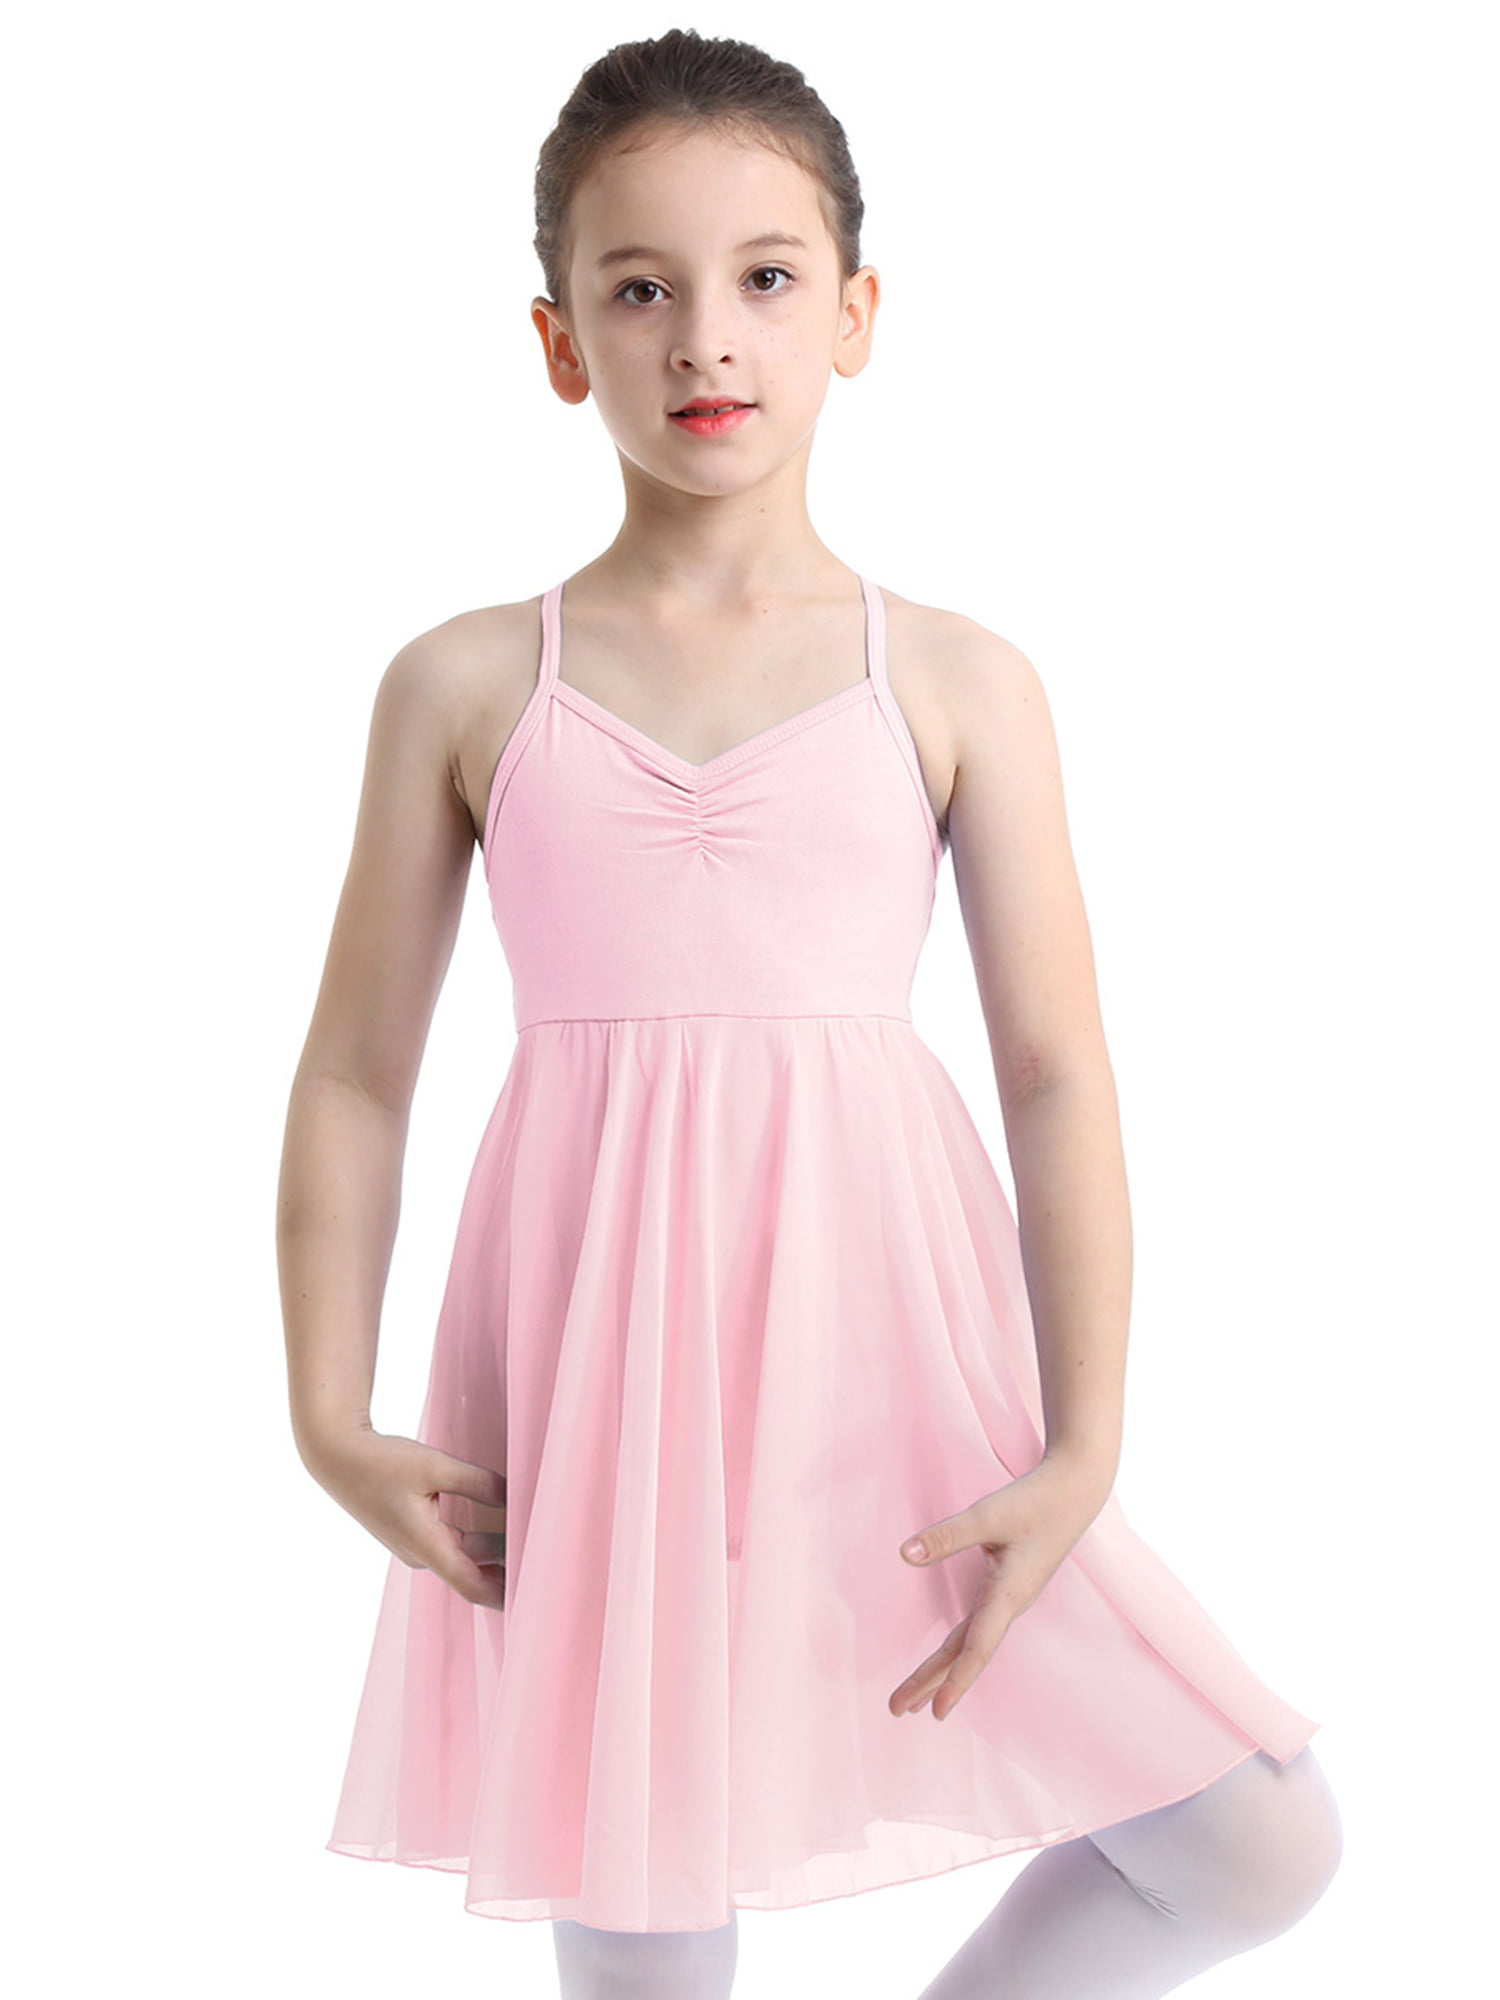 Purple Lyrical Ballet Dance Dress Costume Child Large & Adult XL Fairy 